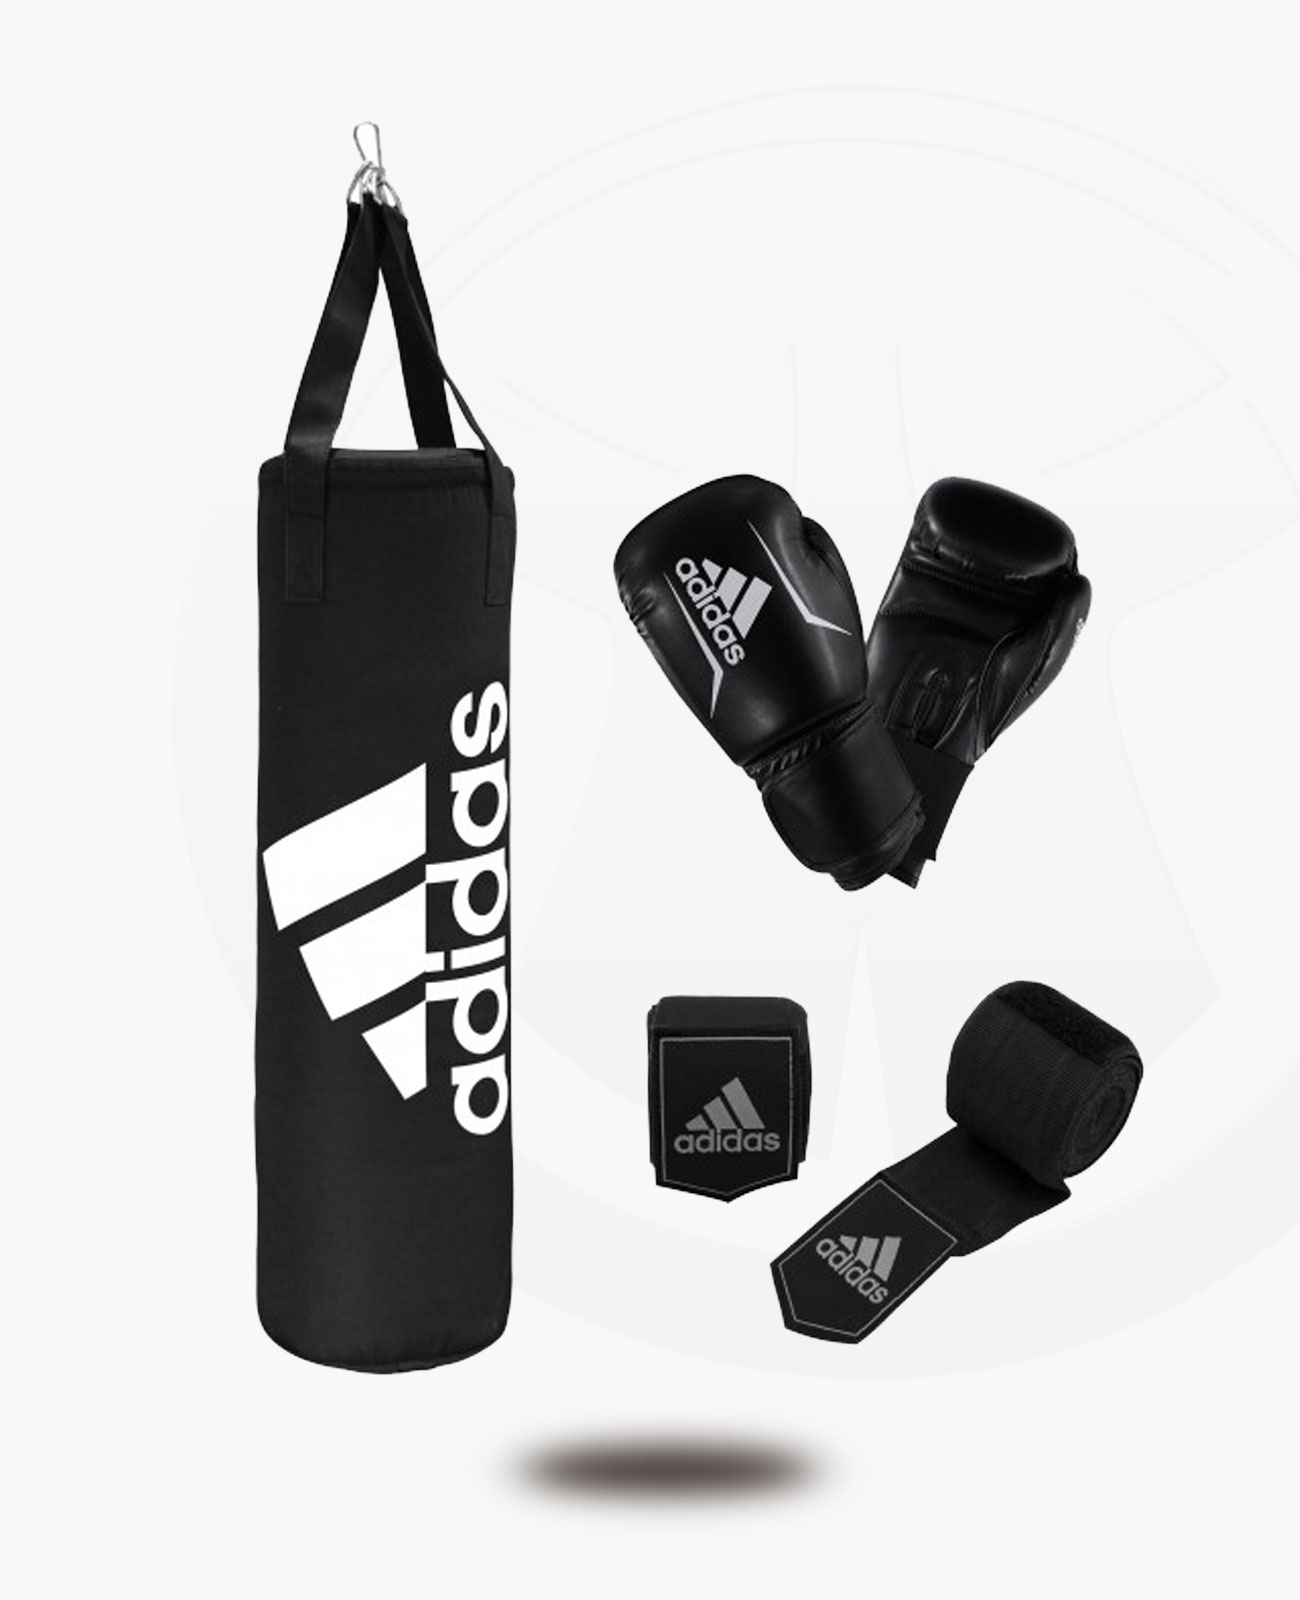 adidas Performance Boxing Set schwarz 18kg 80x30cm Boxsack + 12 oz  Handschuhe adiBAC11KIT | Fightshop & Budo Ausrüstung